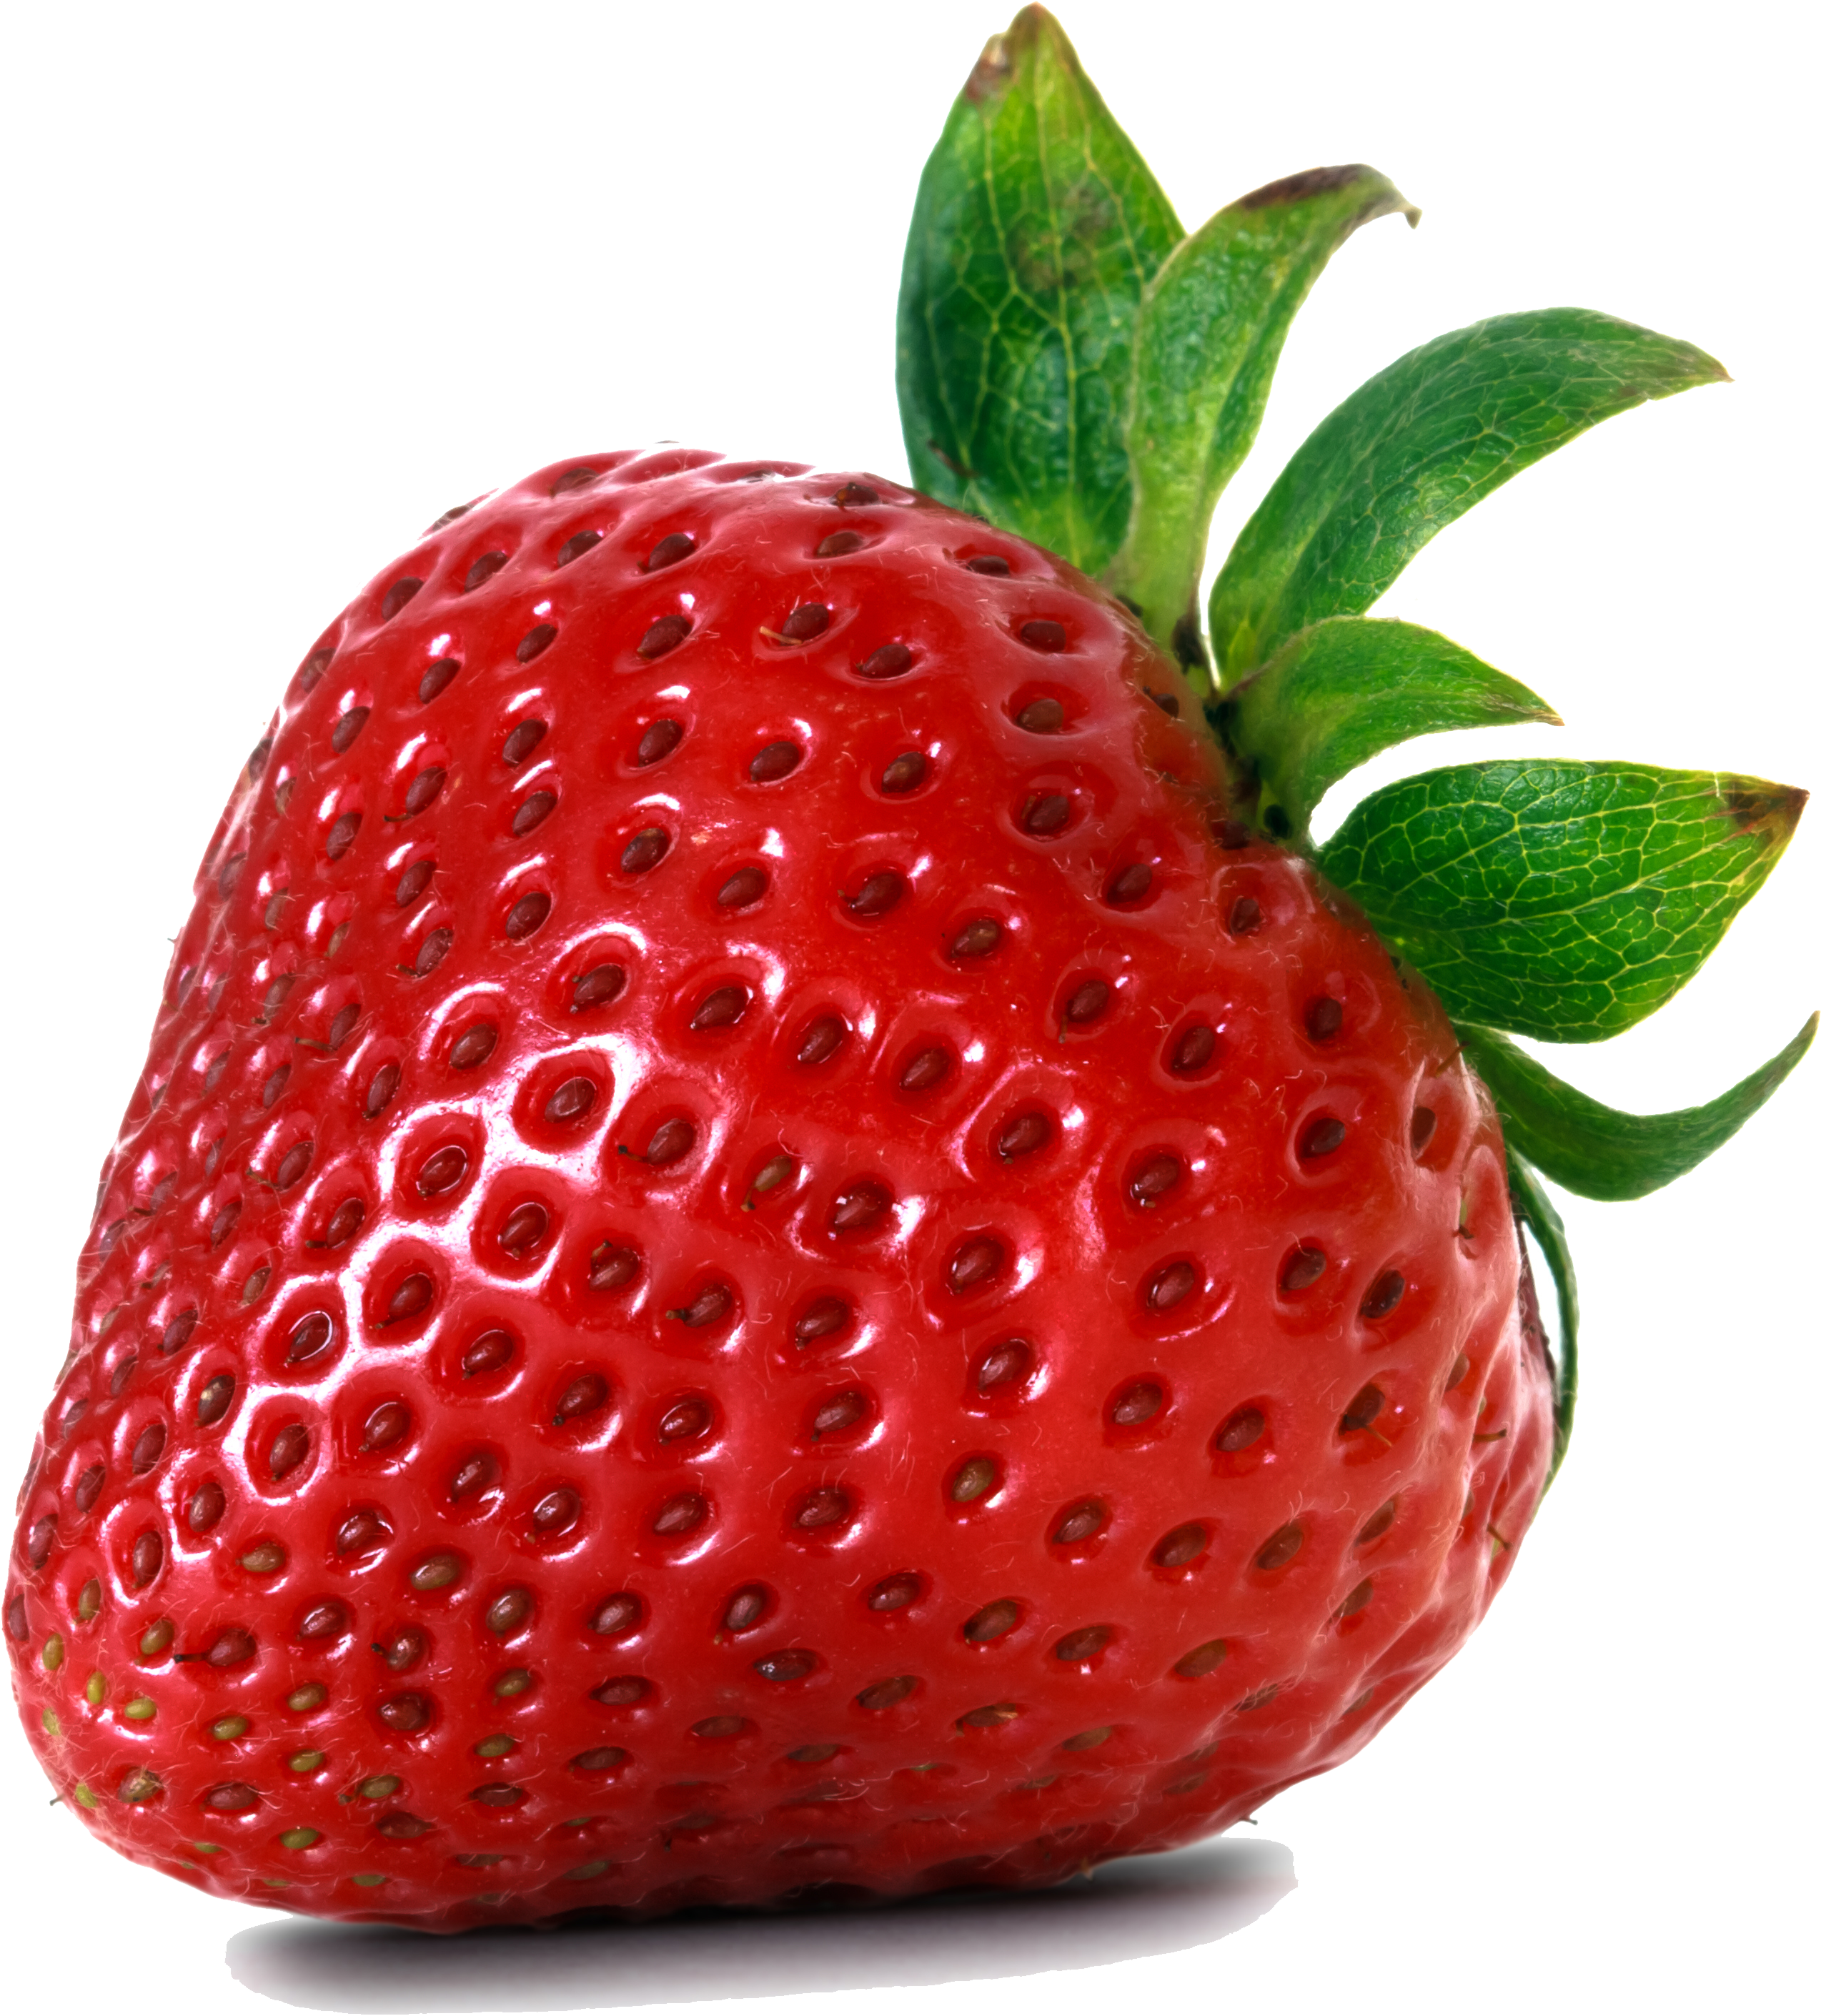 Healthybody - That's It - Fruit Bar Apple Strawberries - 1.2 Oz. (3400x3400)